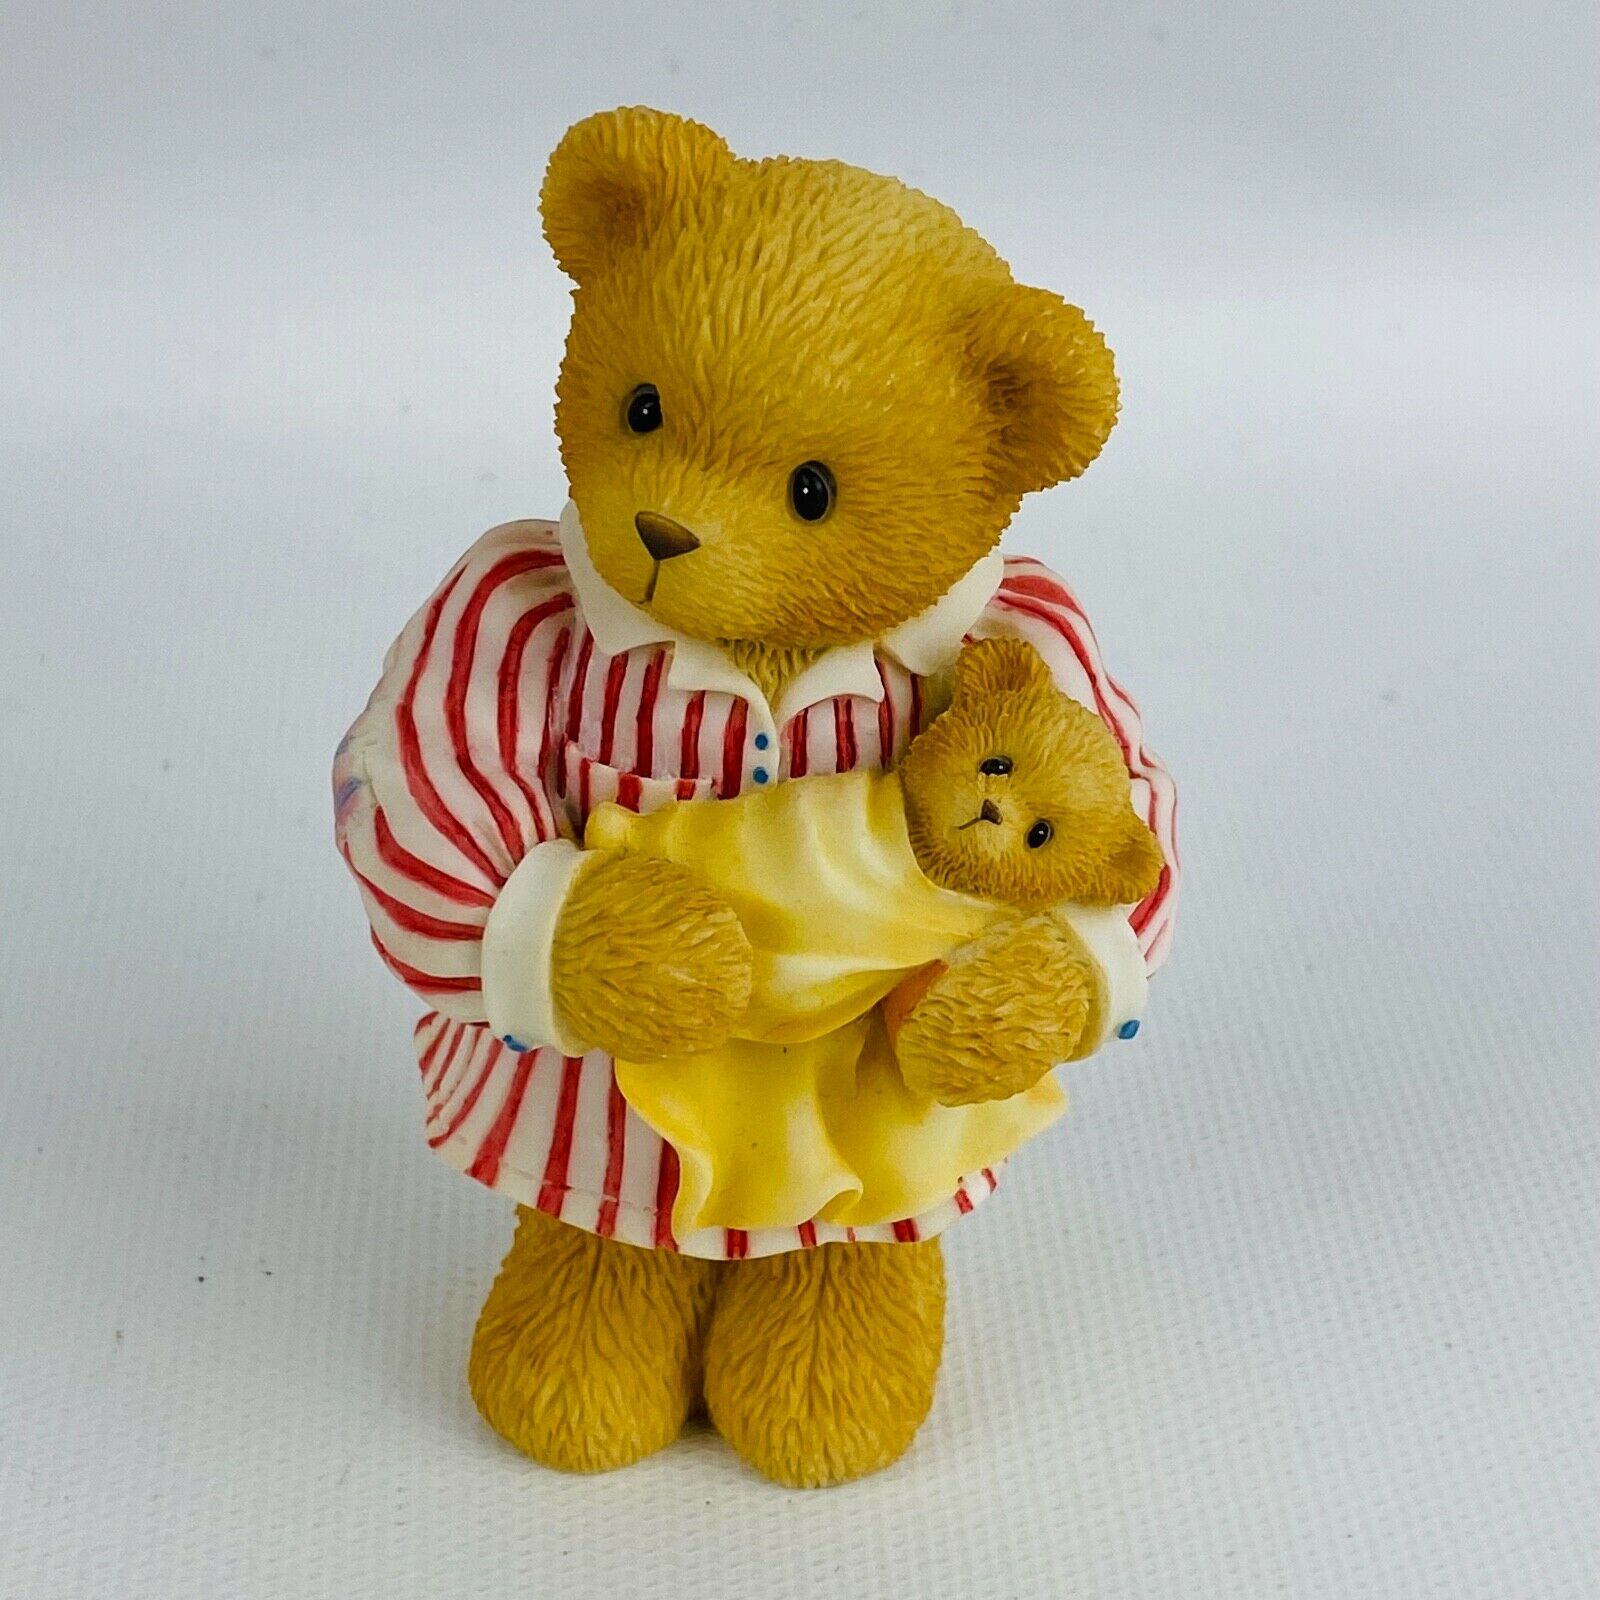 Cherished Teddies Lela Nightingale Figurine Ct981 1998 Membears Only